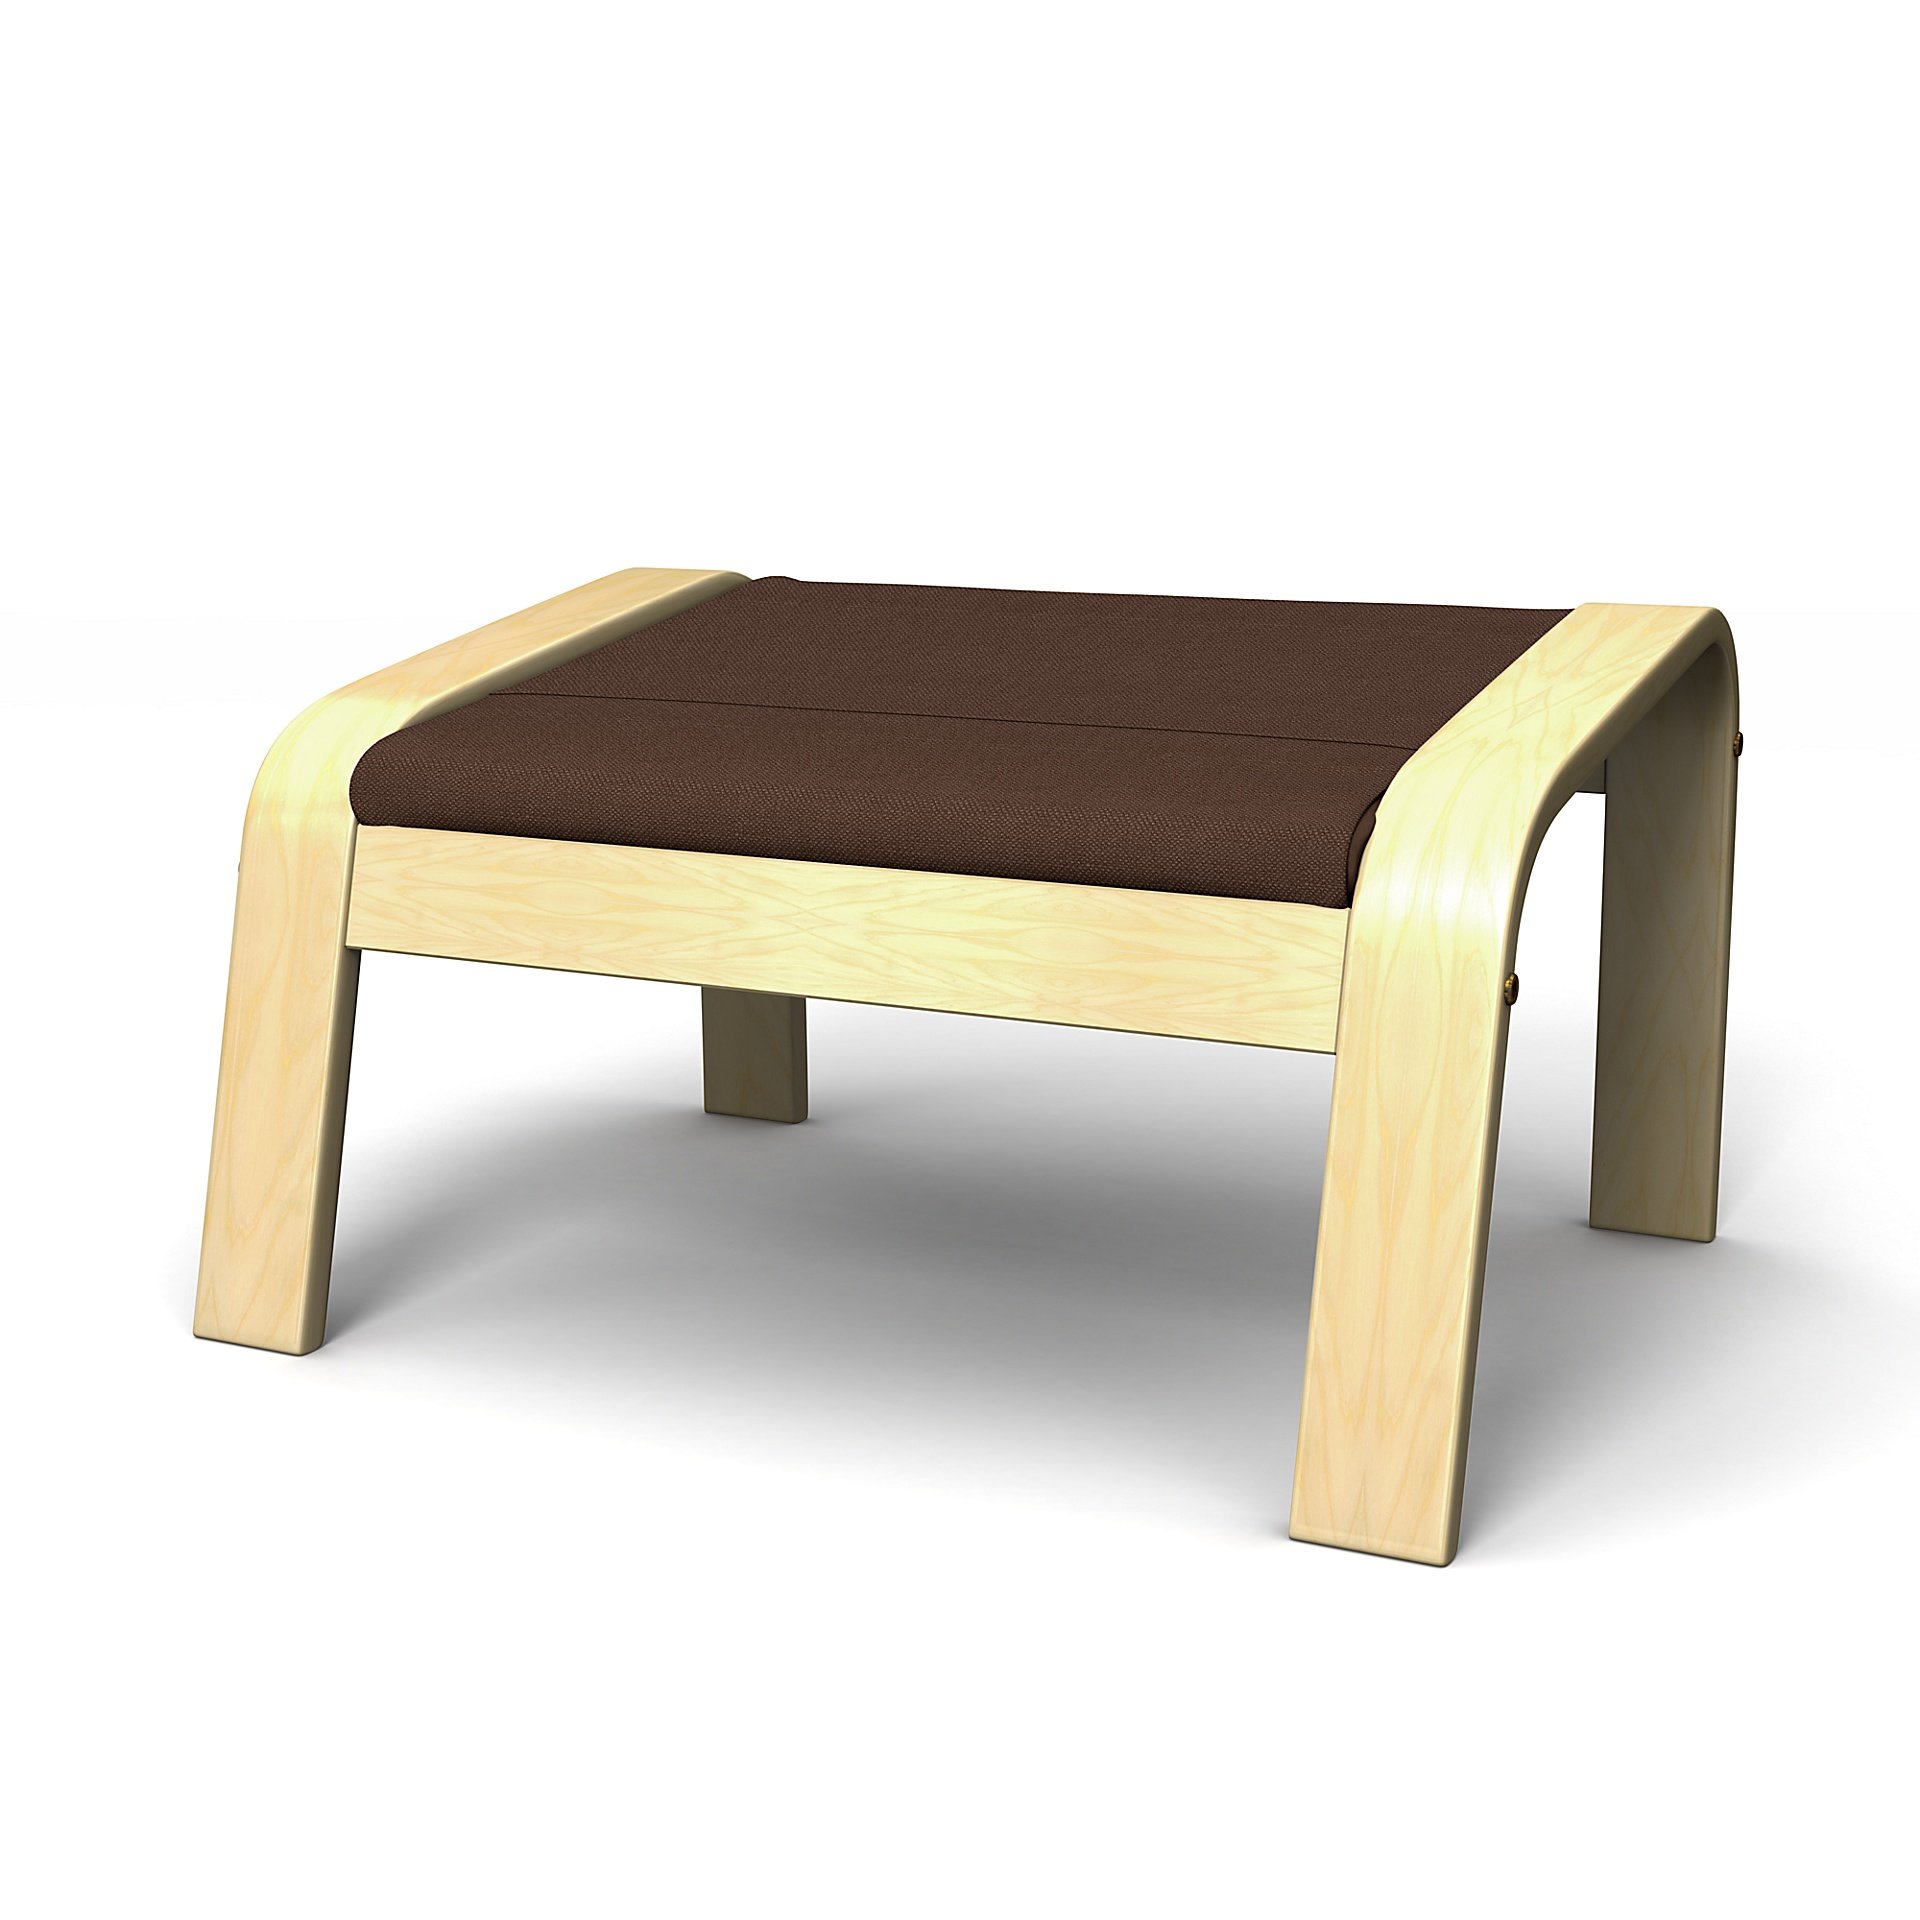 IKEA - Poang Footstool Cover, Chocolate, Linen - Bemz